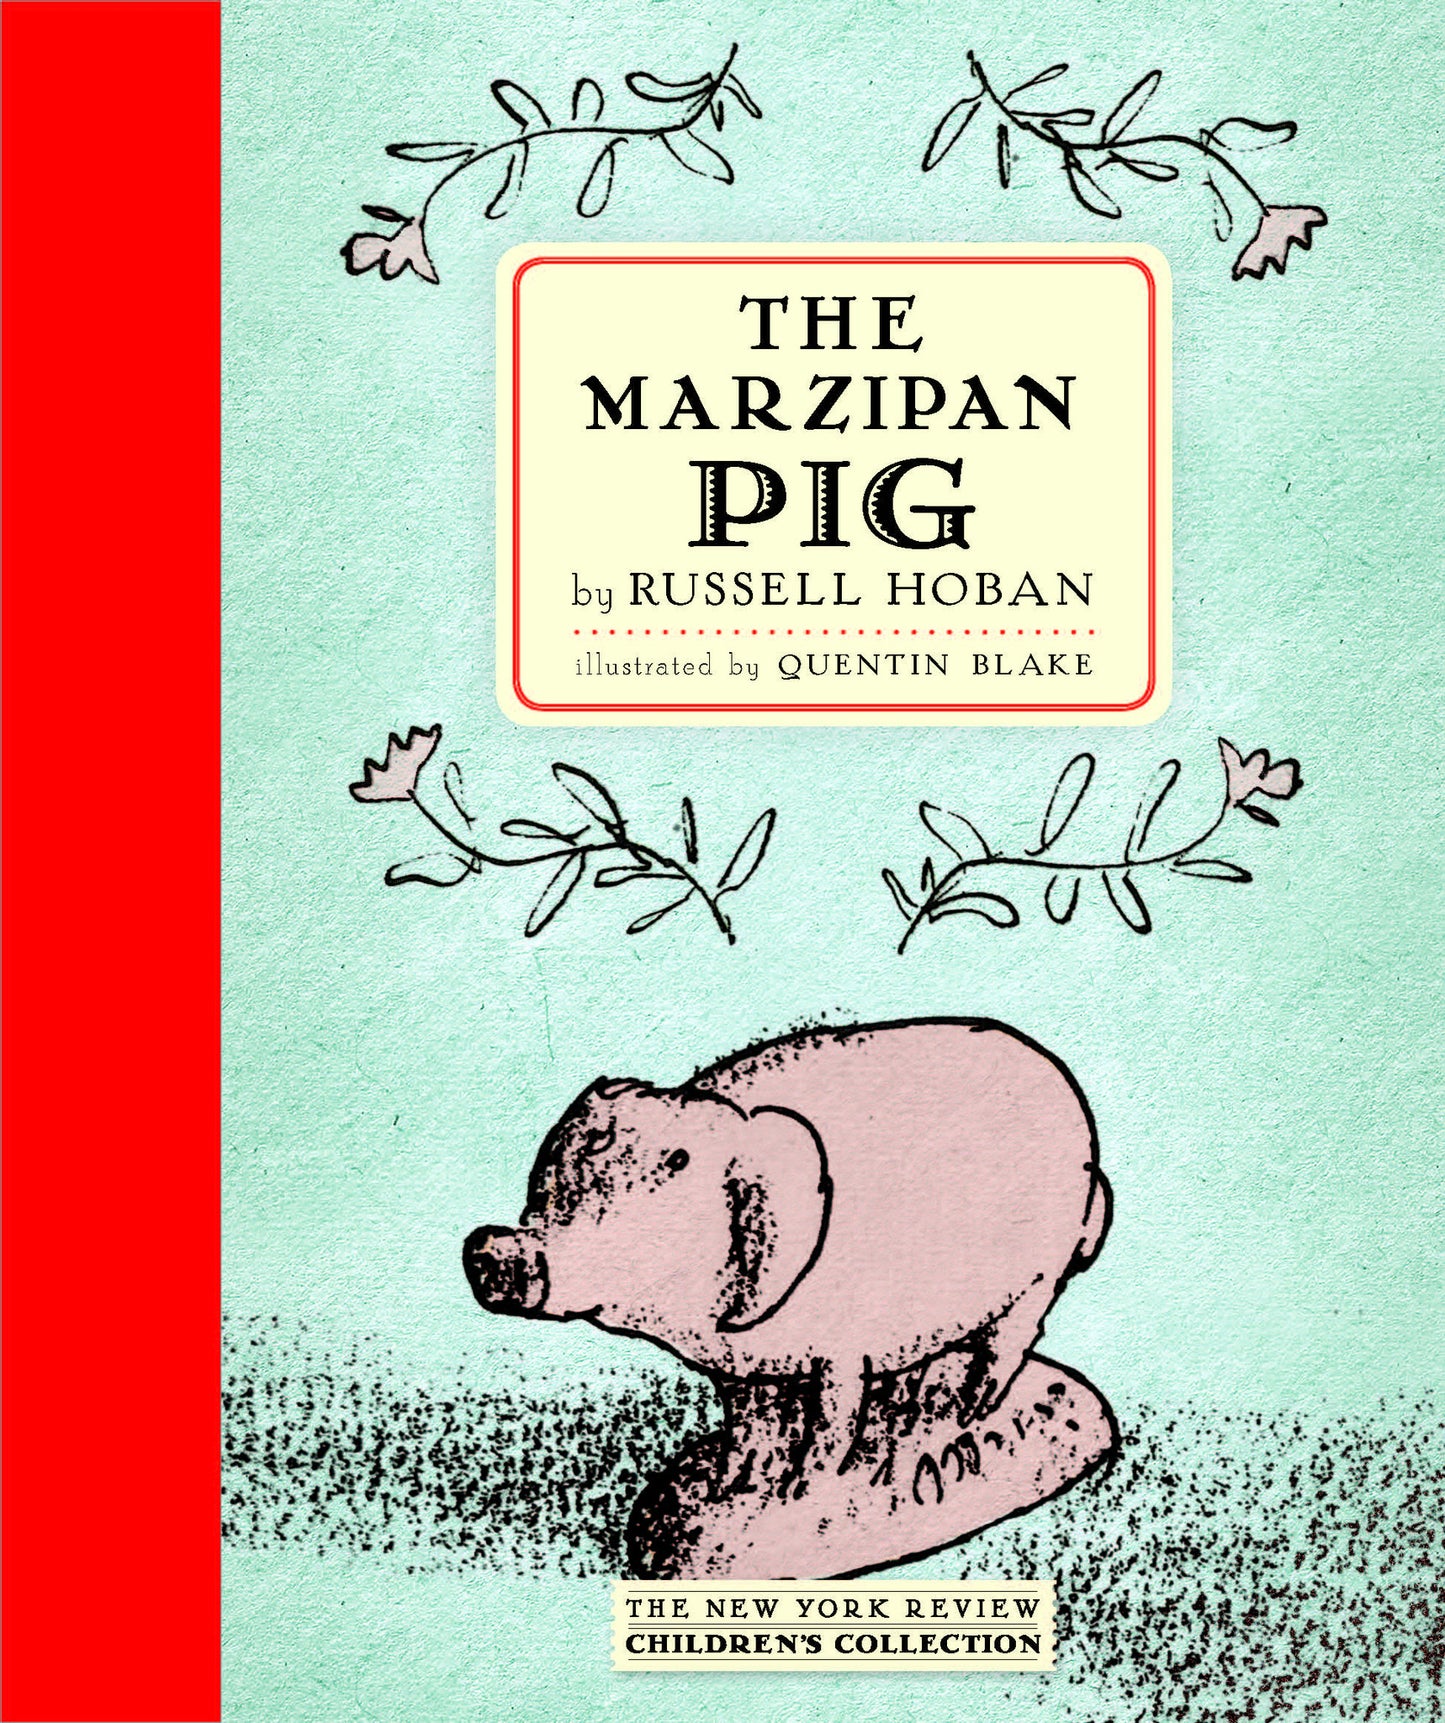 The Marzipan Pig